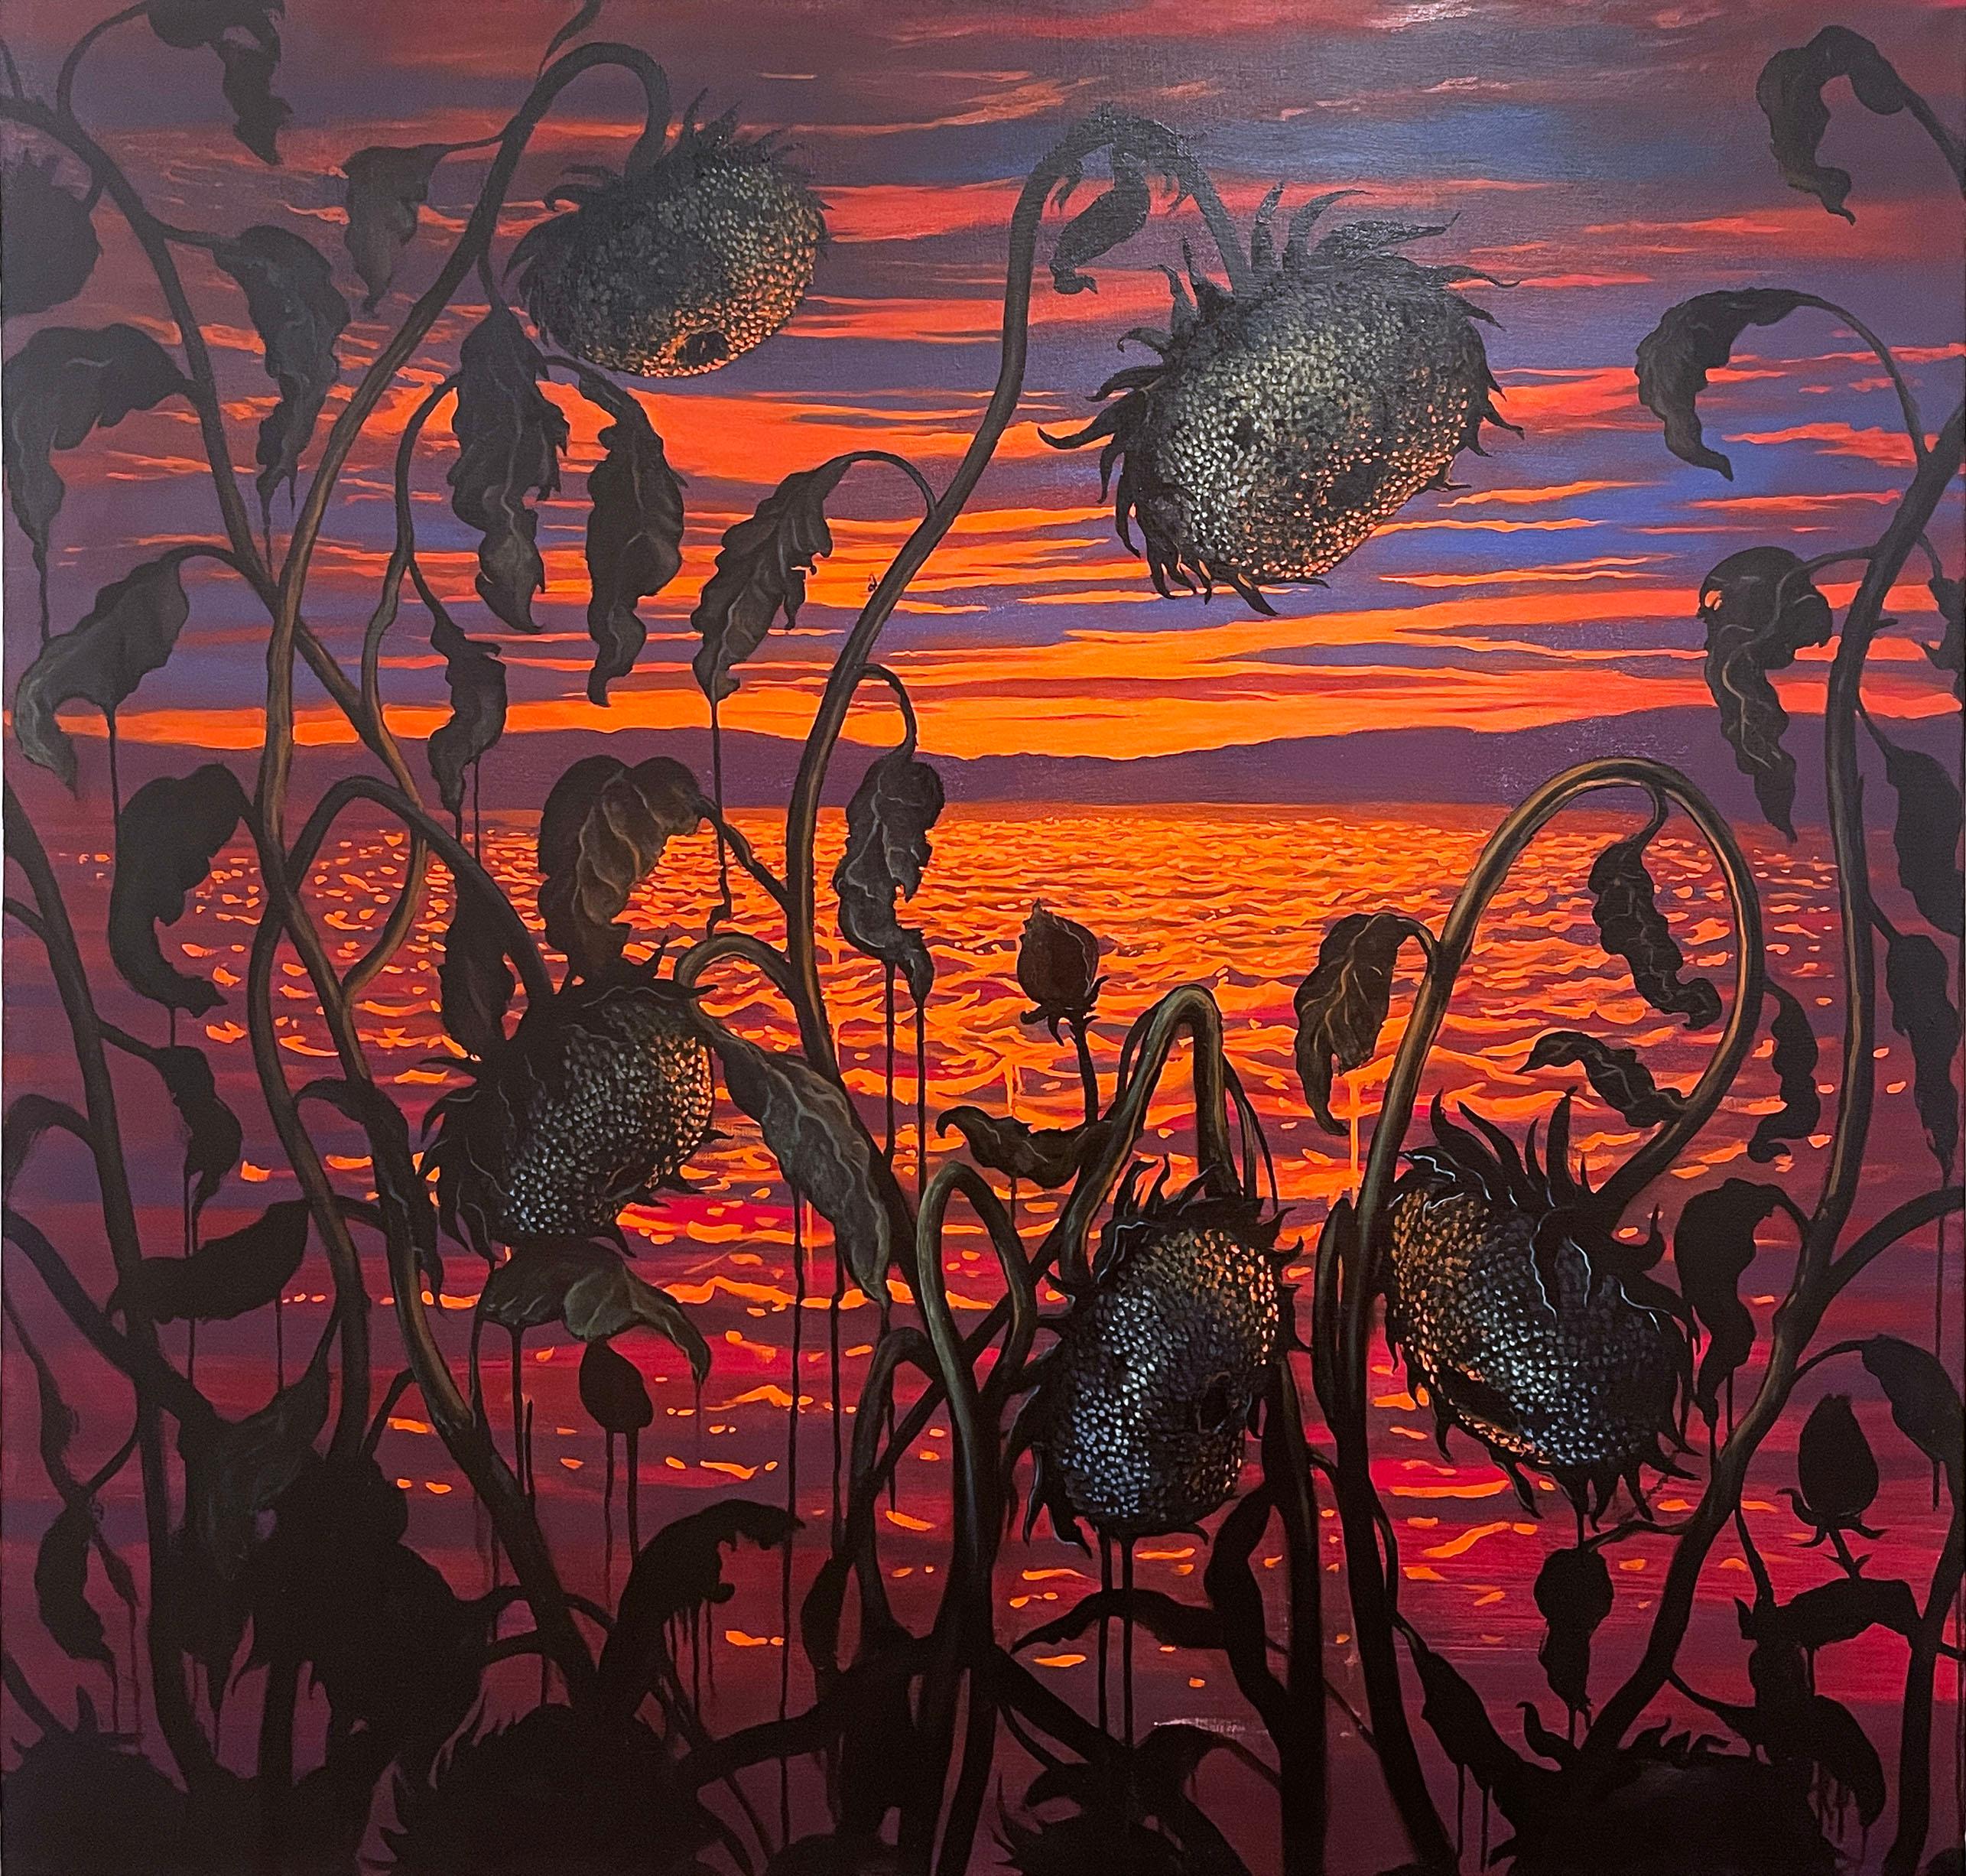 Fabricio Suarez Landscape Painting - Old Gods Almost Dead (2021), oil on linen, waterscape, skyscape, sunflowers 